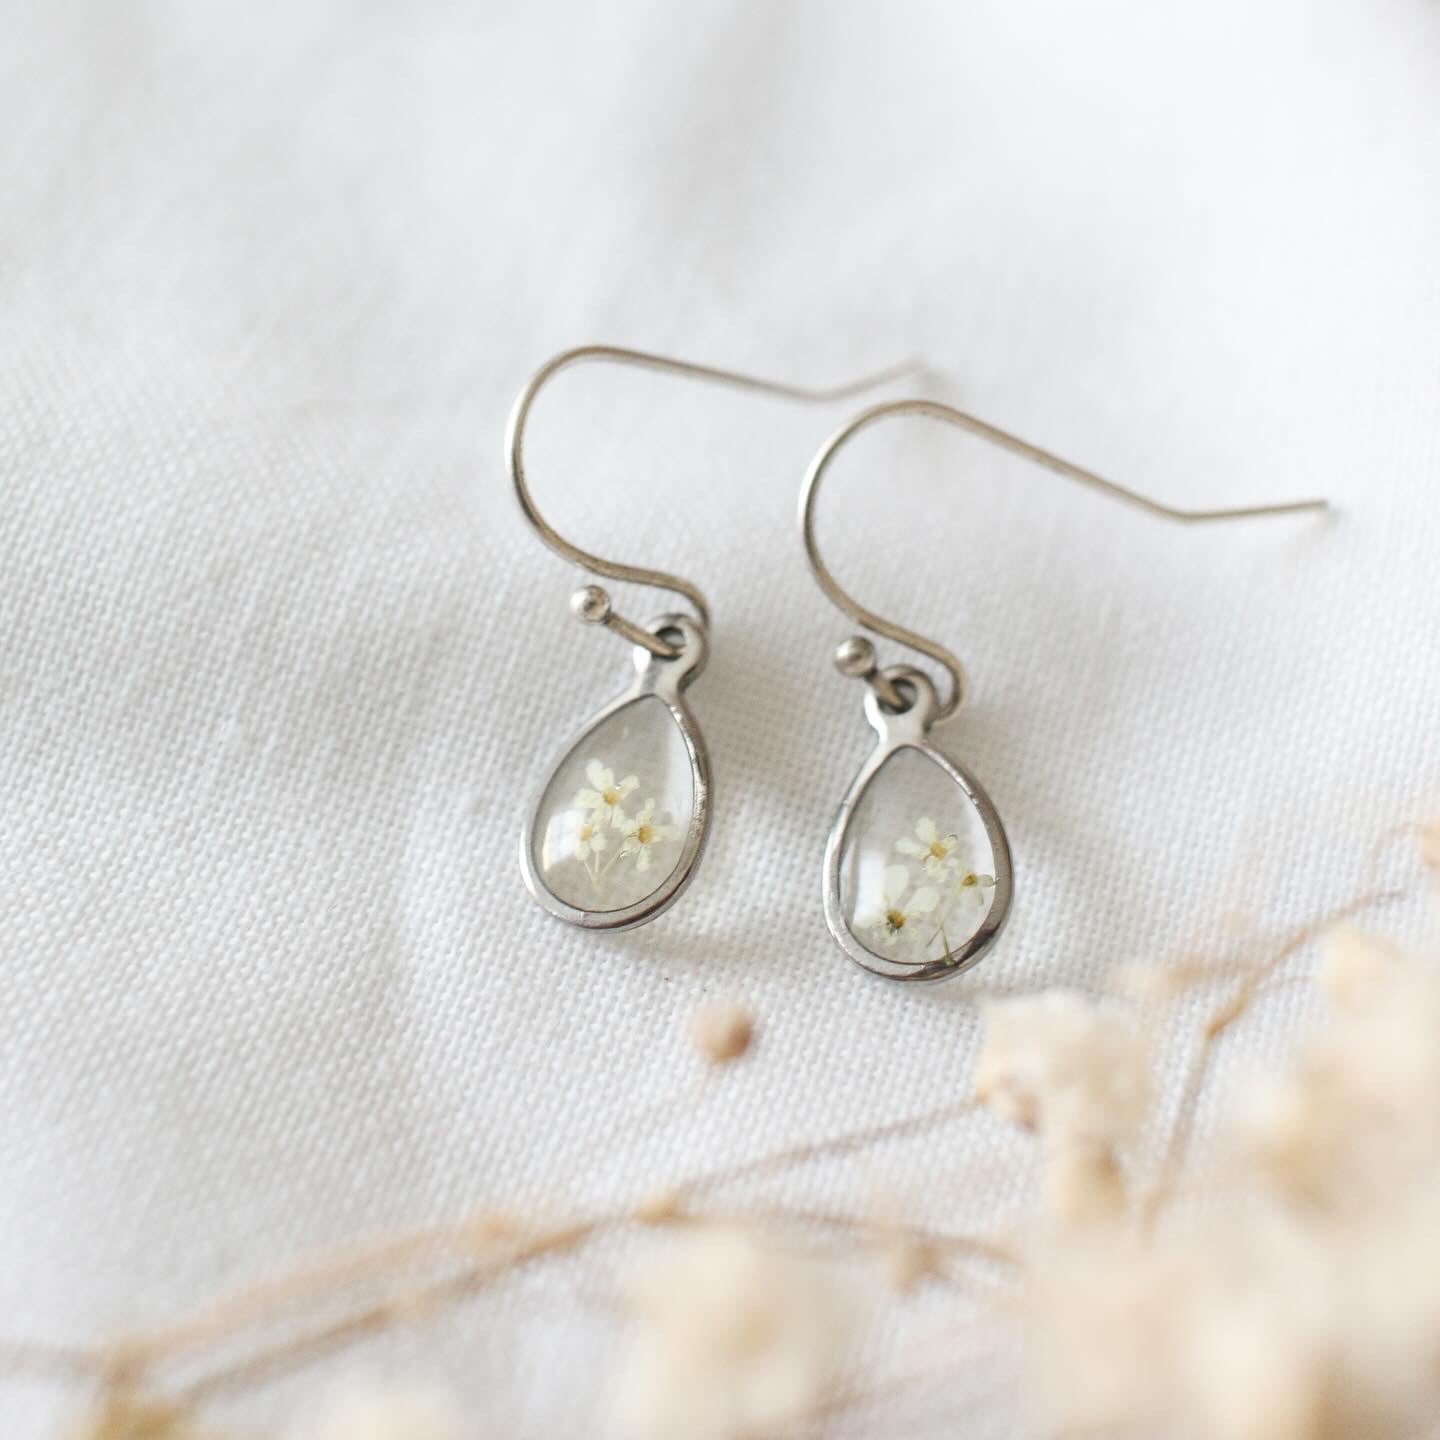 Raindrop French Hook Earrings in Silver